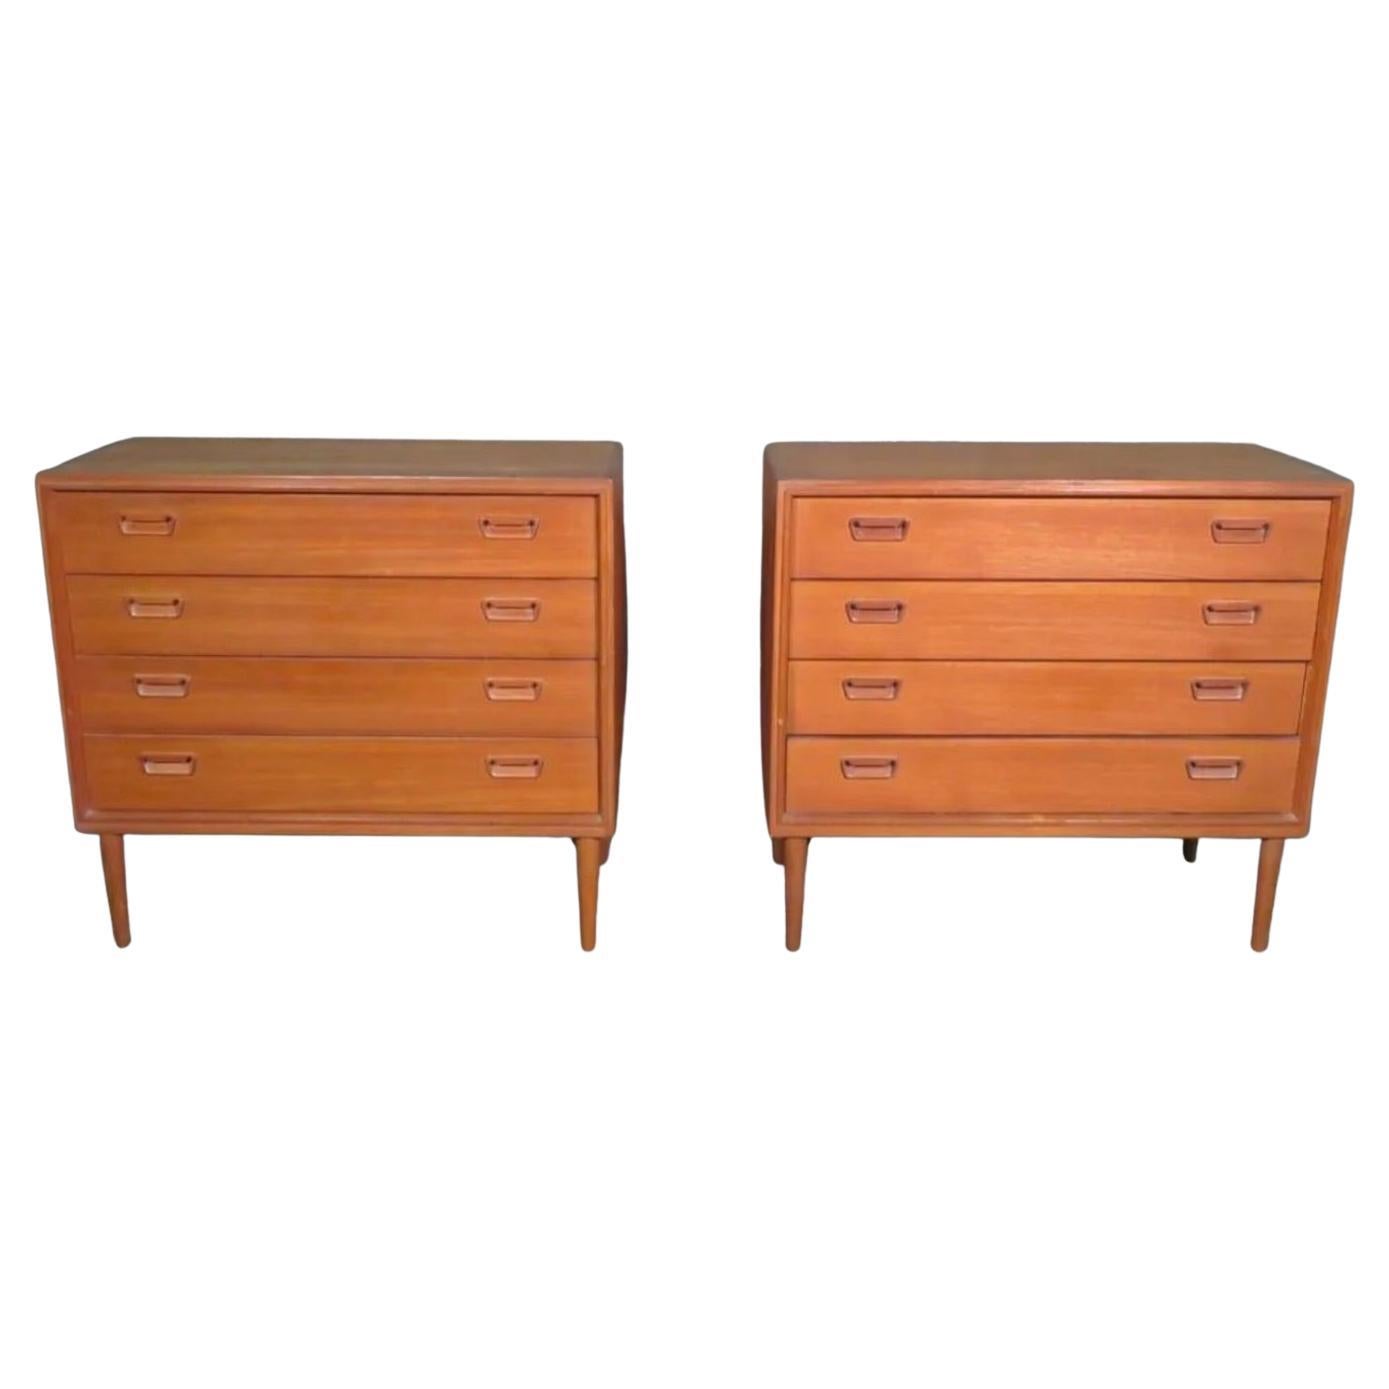 Pair of Vintage Danish Dressers